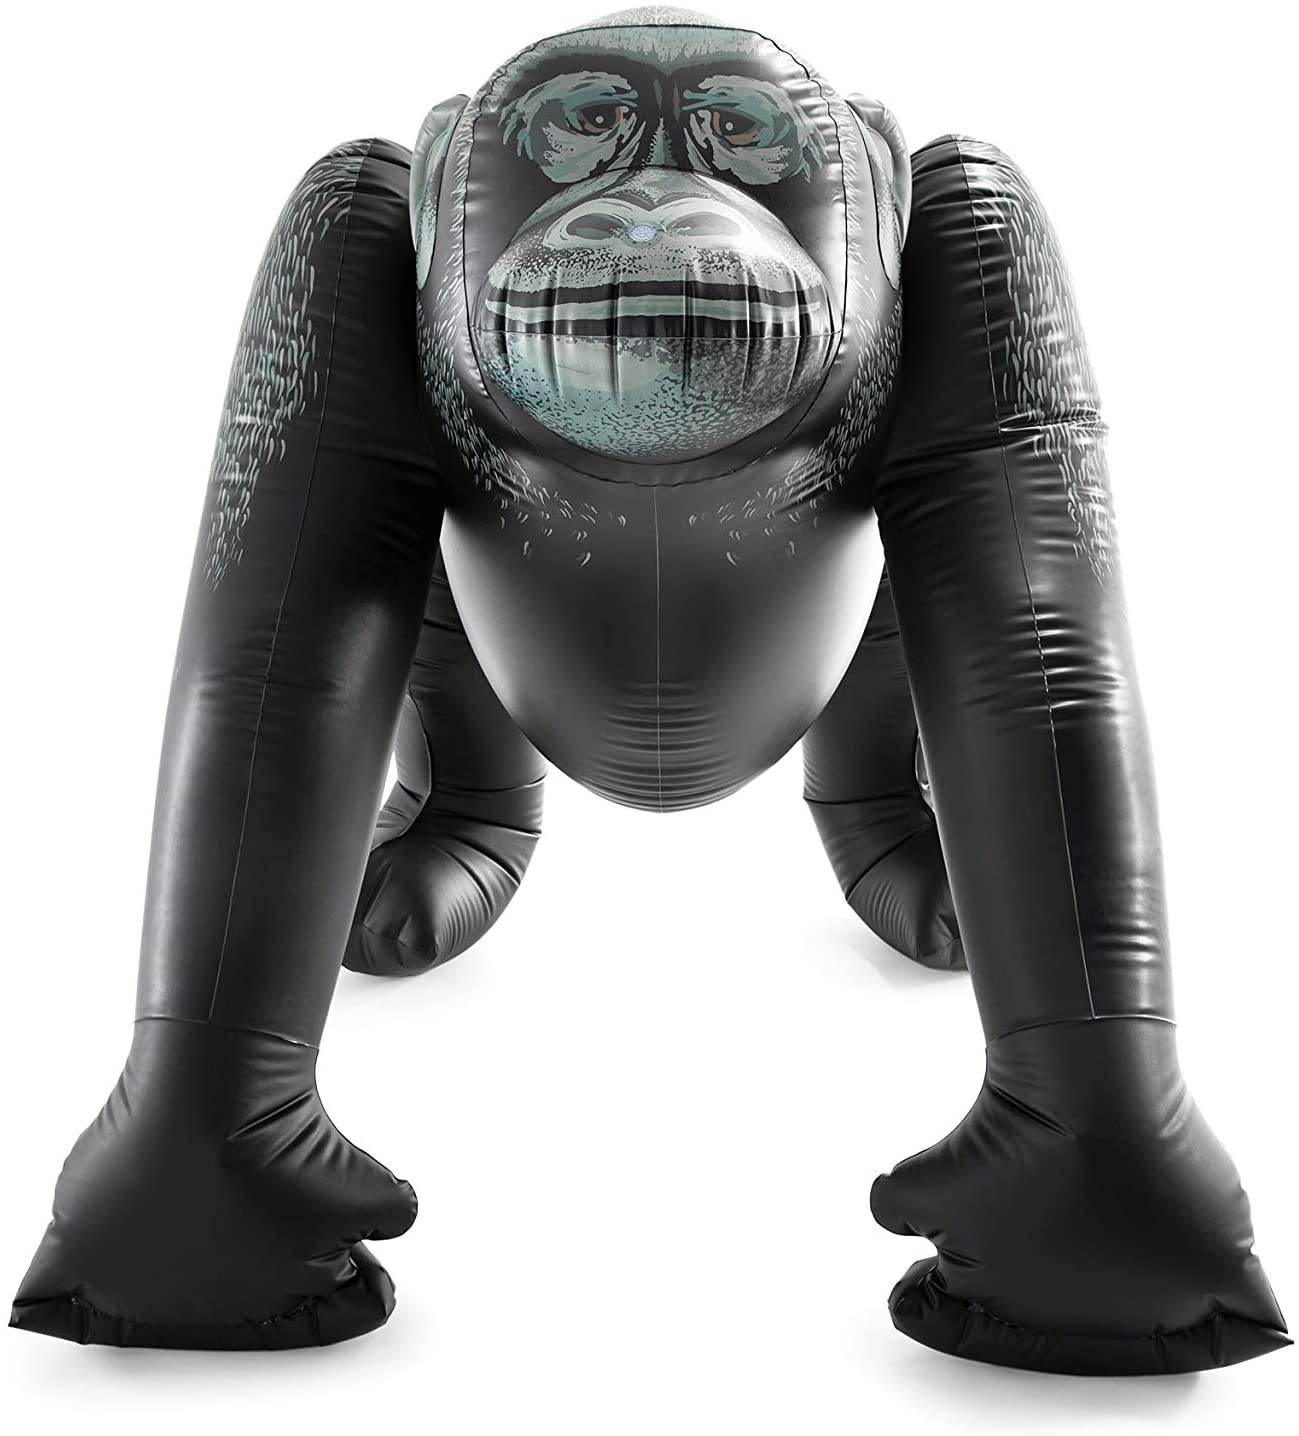 Giant Gorilla INTEX (170x170x185cm) Sprinkler Wasserspielzeug, - schwarz